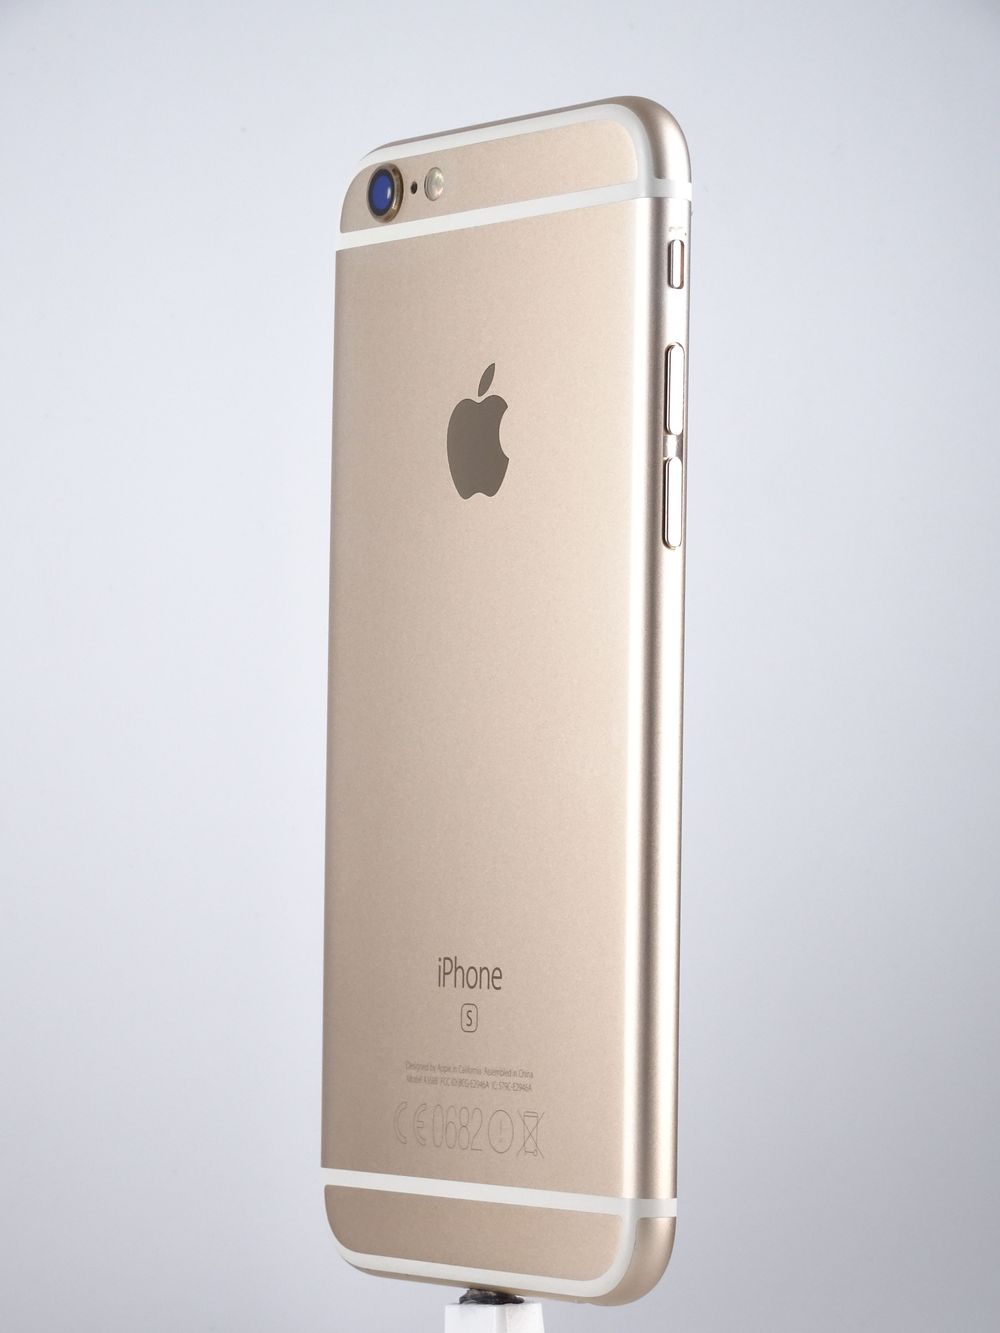 Telefon mobil Apple iPhone 6S, Gold, 16 GB,  Ca Nou